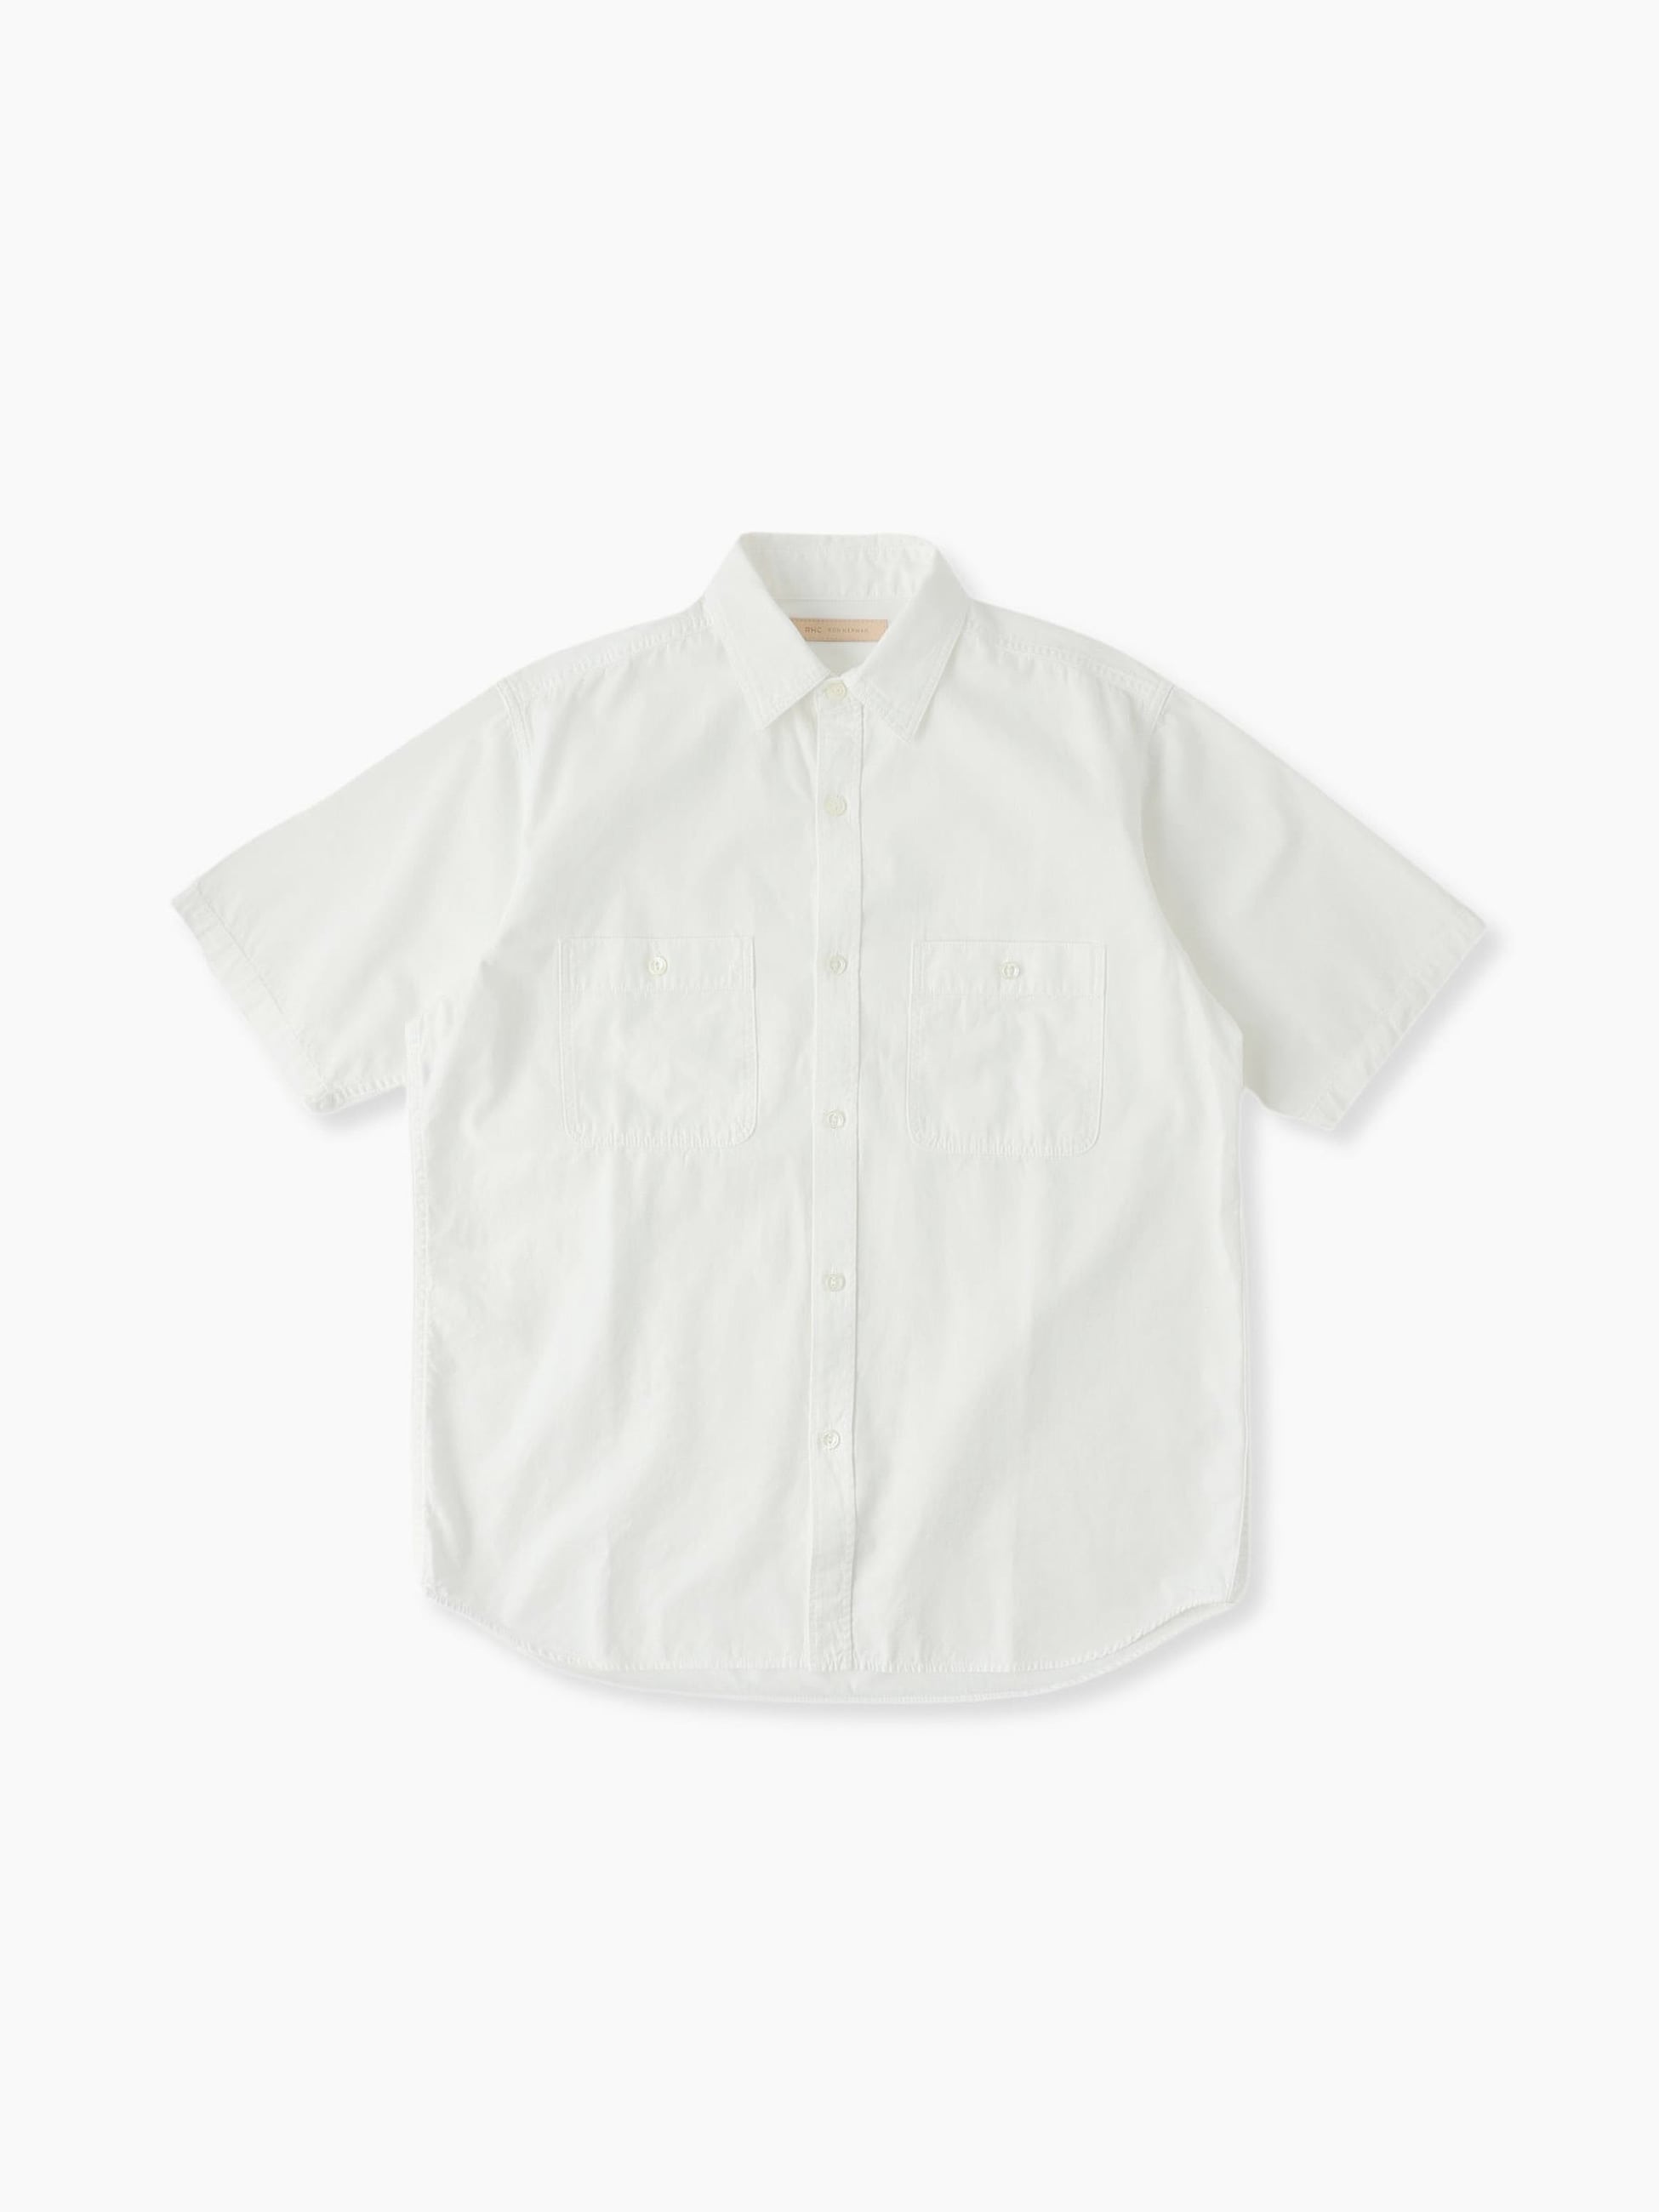 White Chambray Short Sleeve Shirt